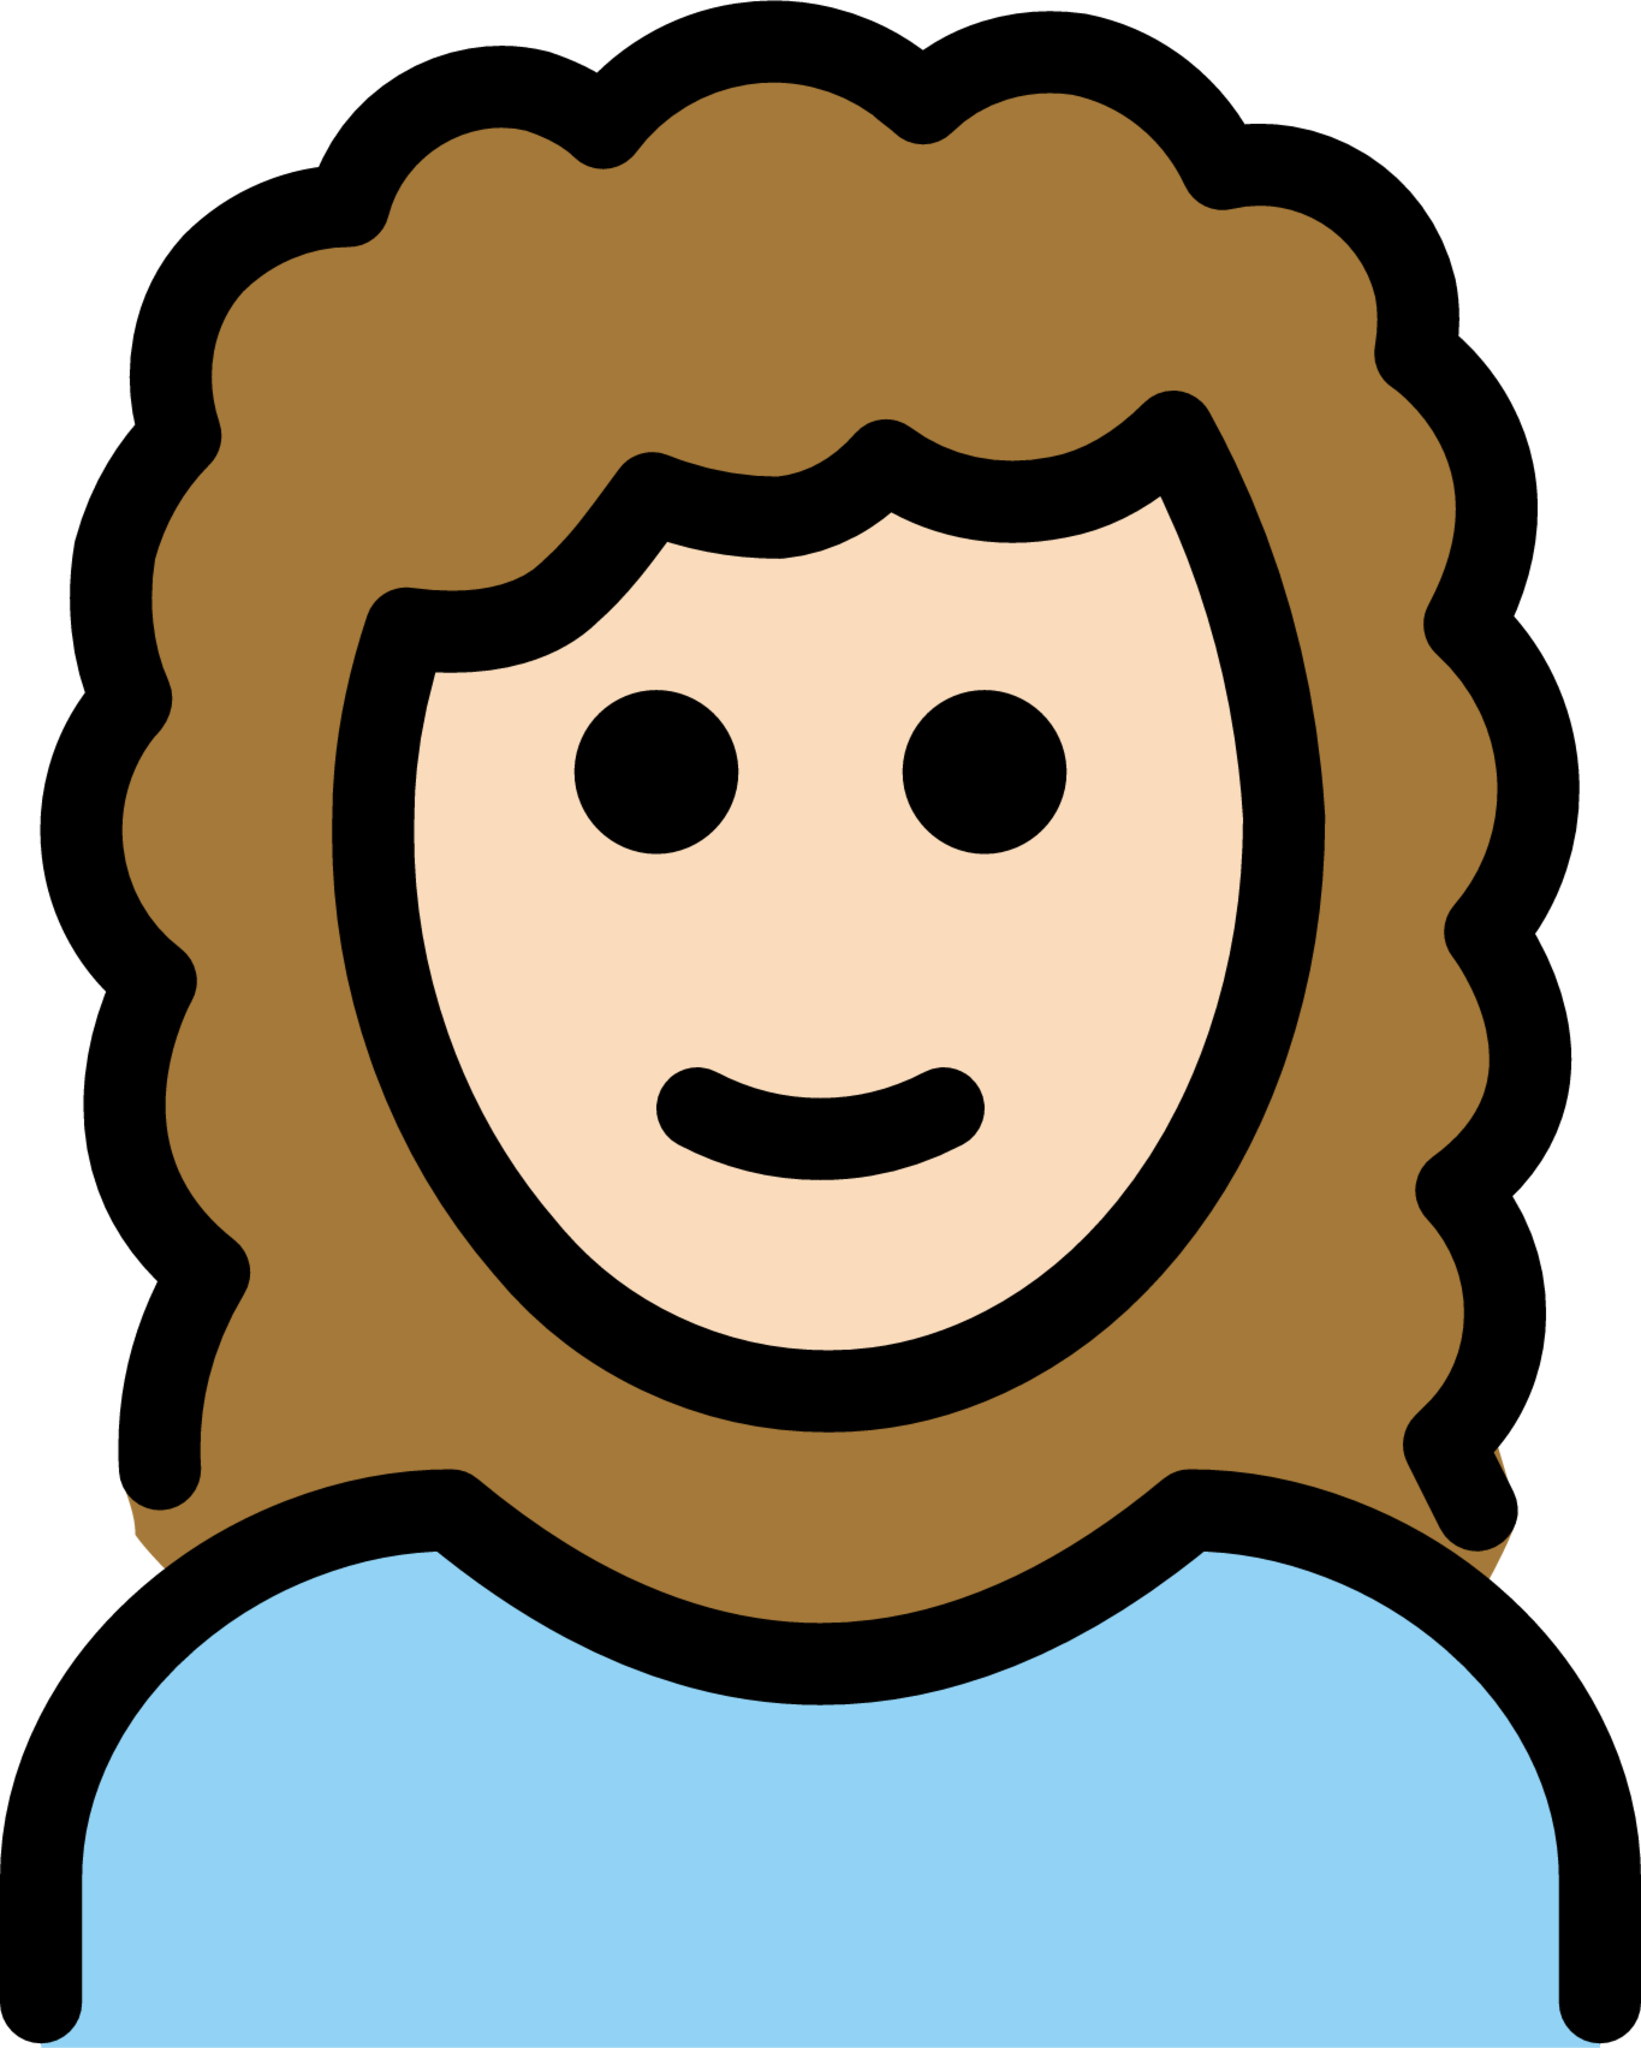 woman: light skin tone, curly hair emoji